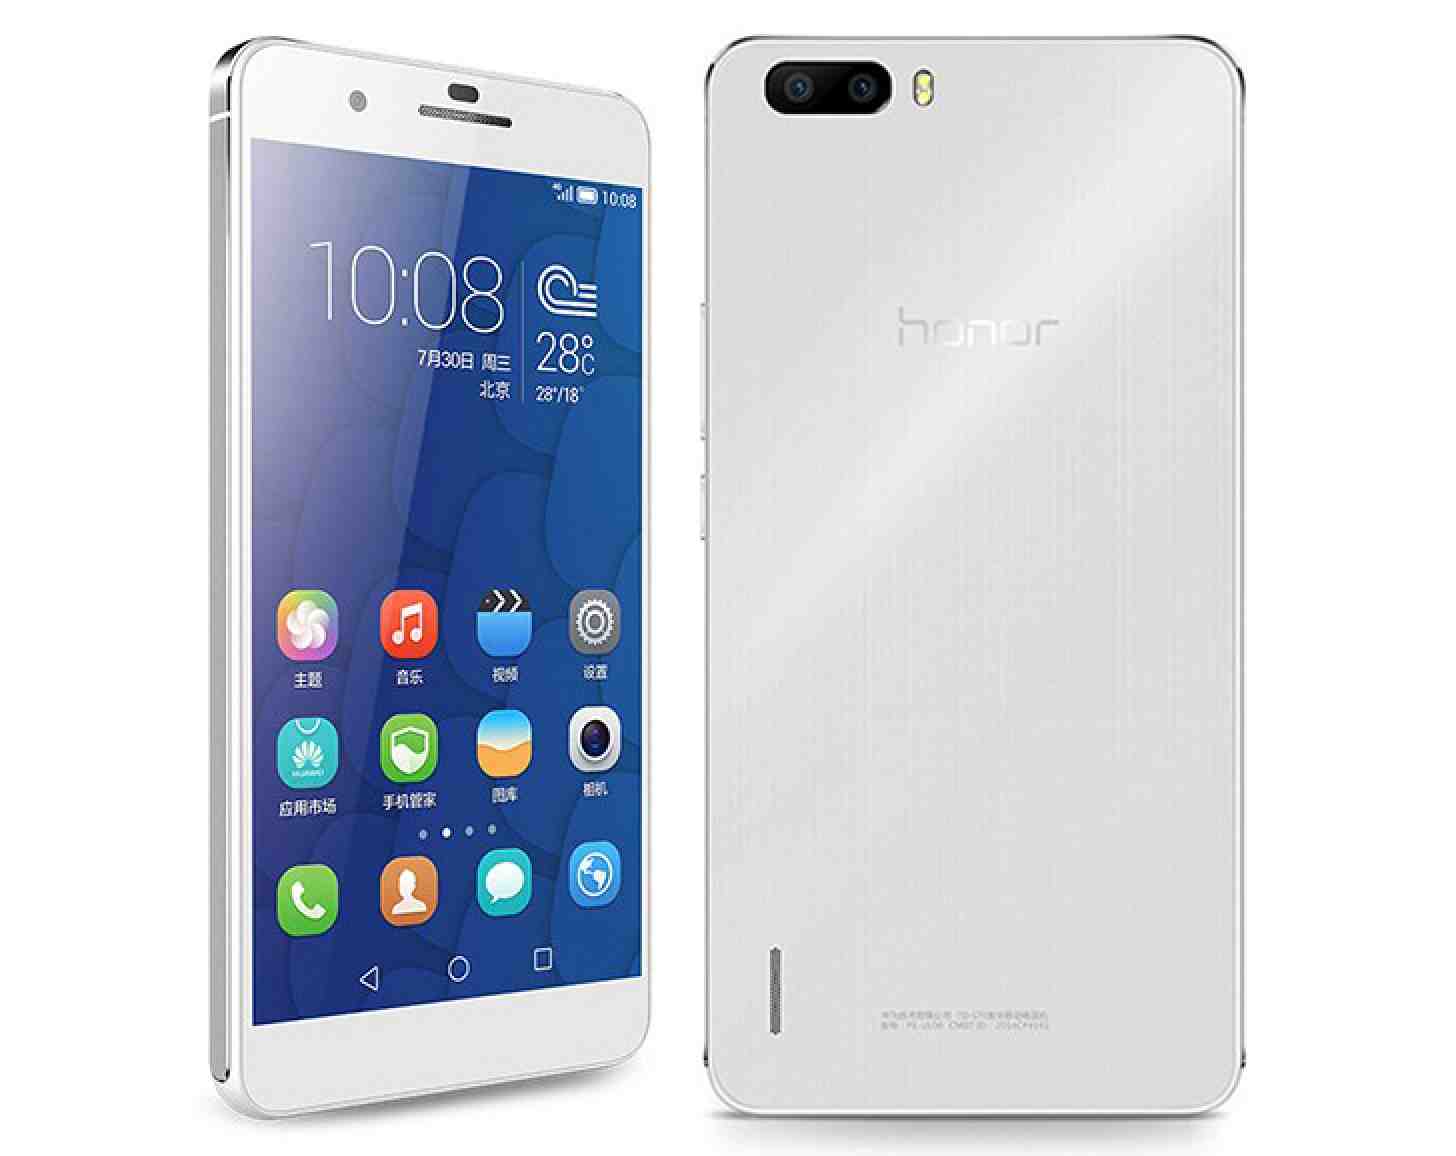 Notebook drempel Klokje Huawei Honor 6 Plus specs, review, release date - PhonesData